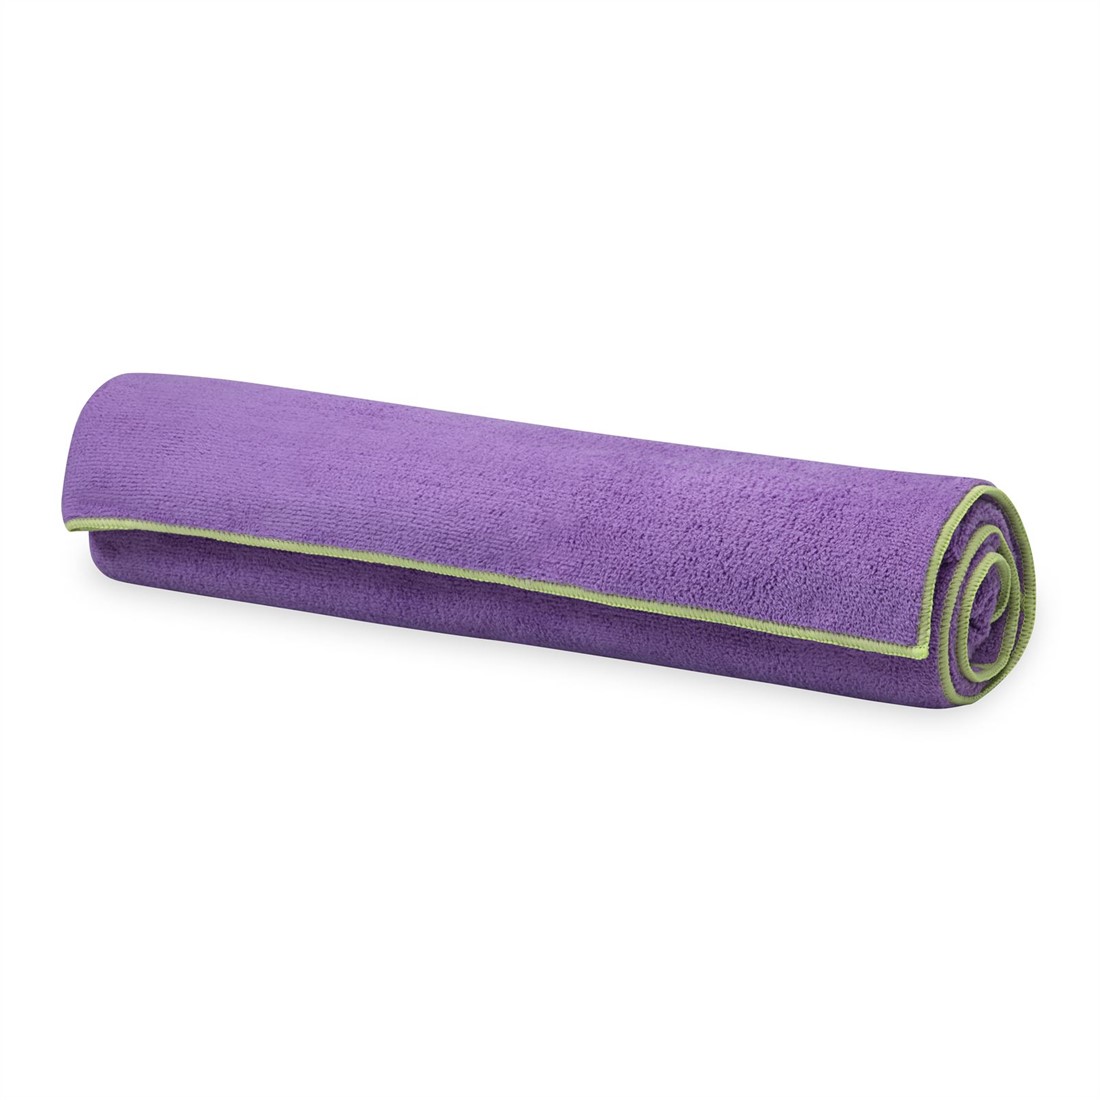 Preventie Geroosterd moreel Gaiam Stay Put Yoga Handdoek - Purple | Fitnessapparaat.nl